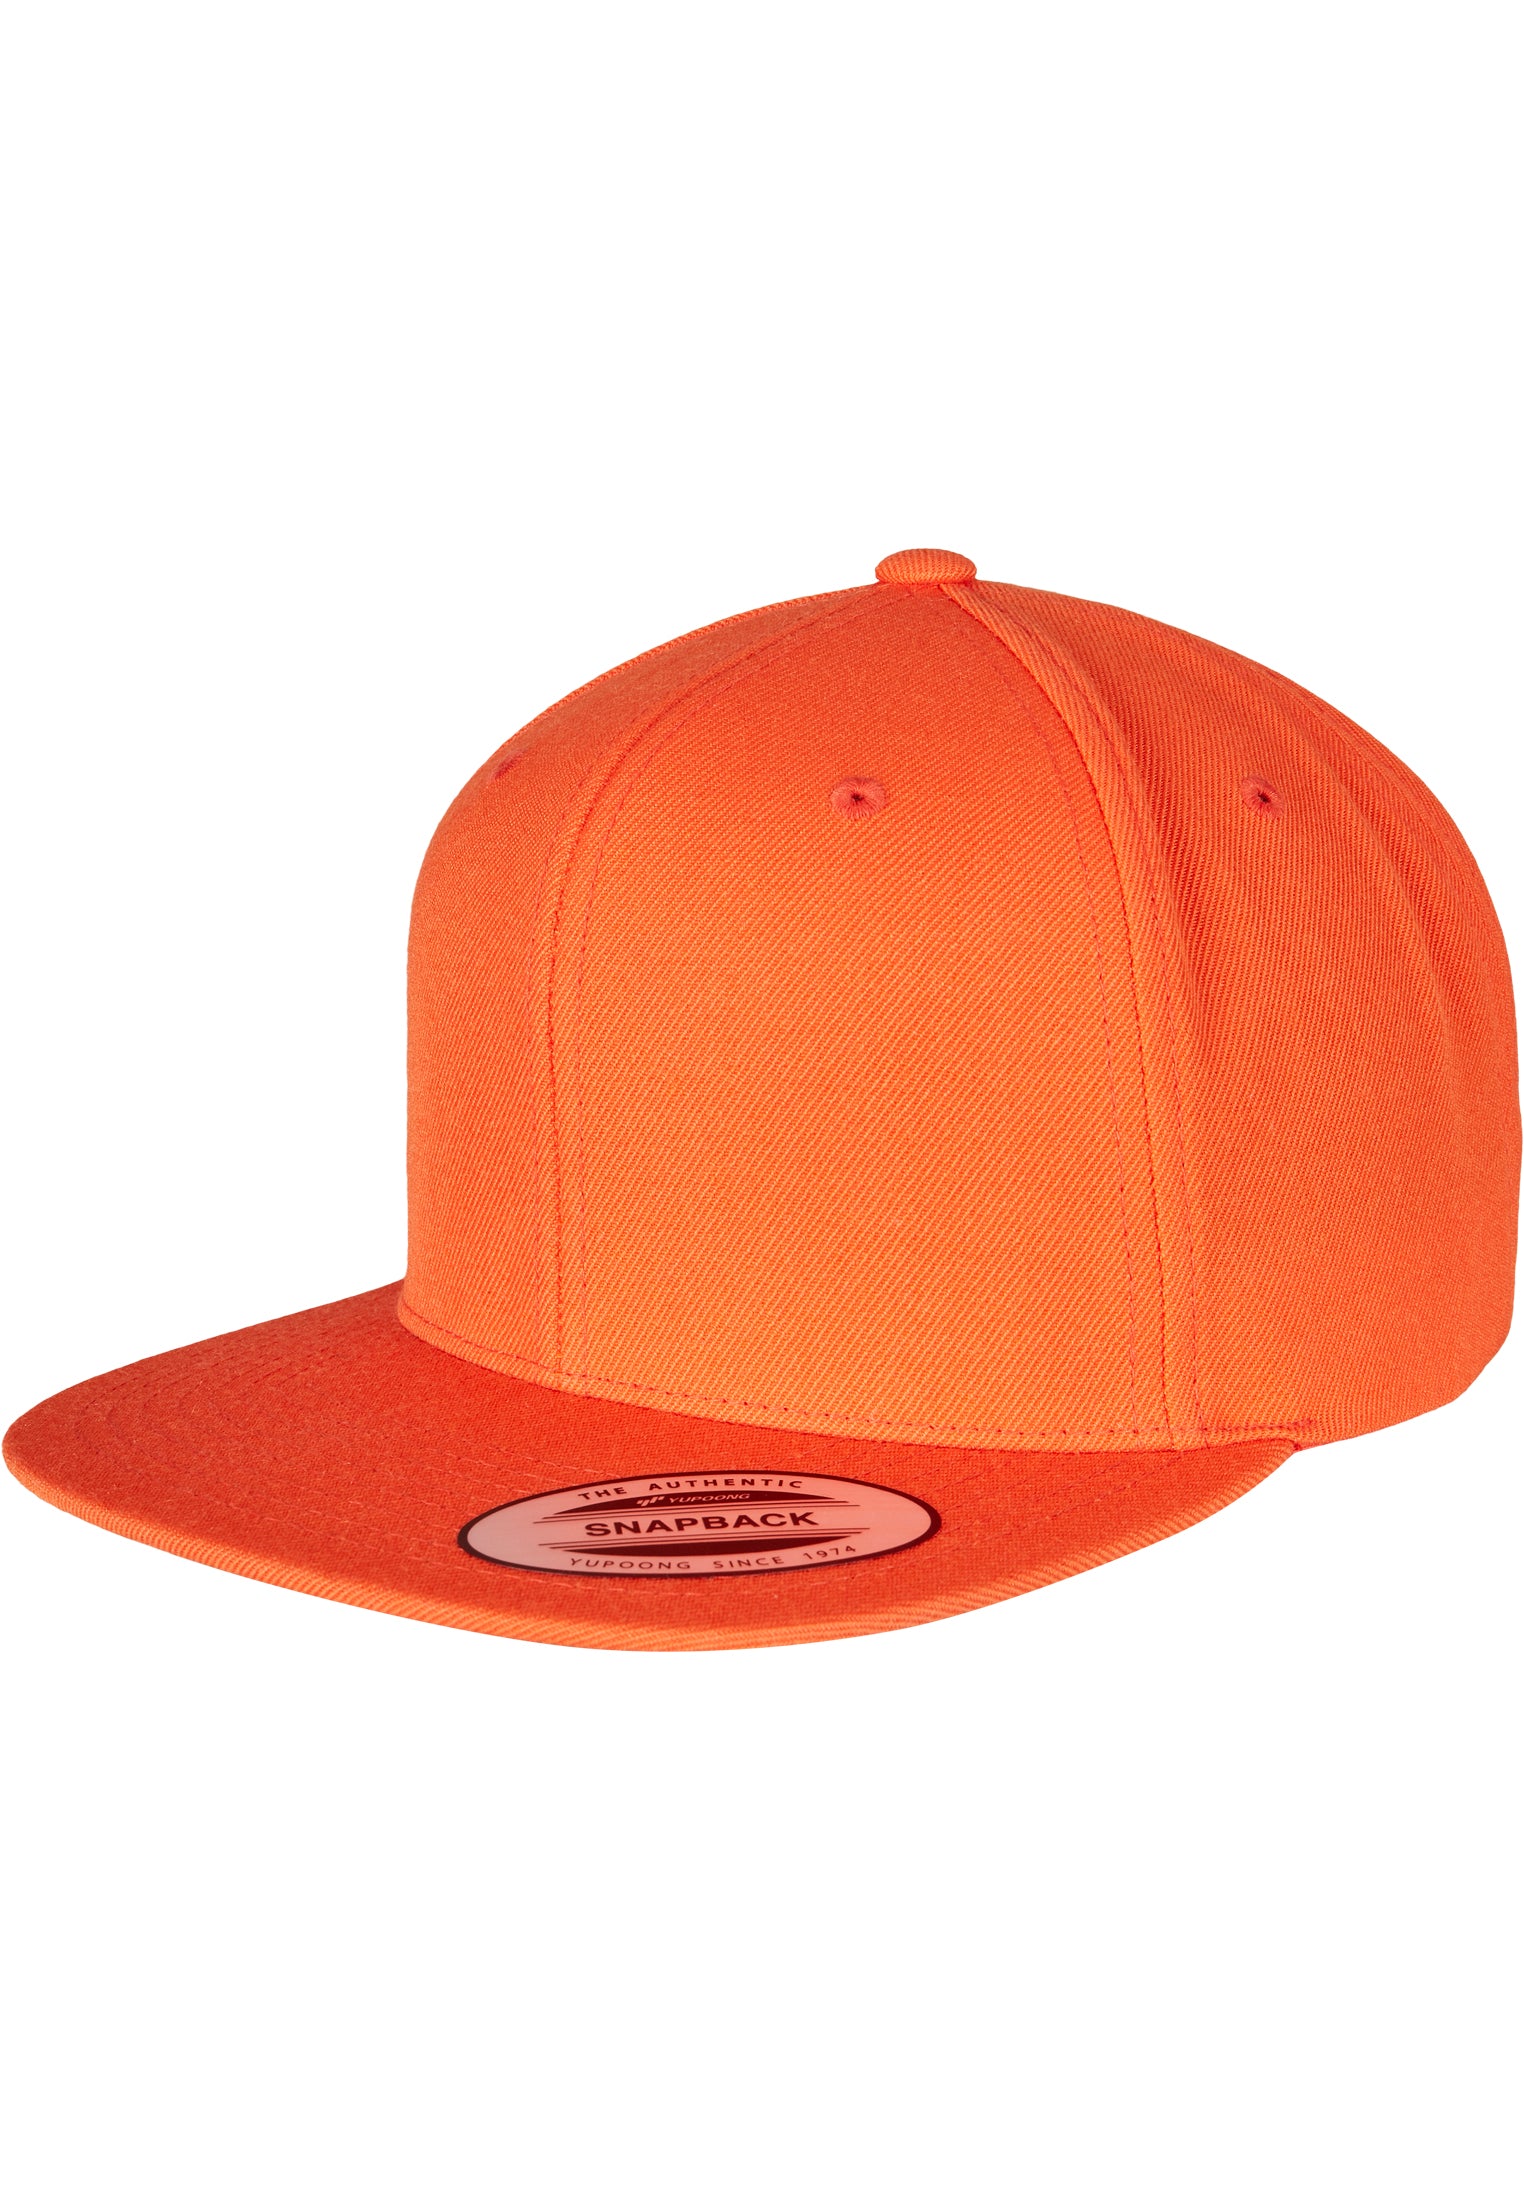 Classic Snapback - Orange - Headz Up 